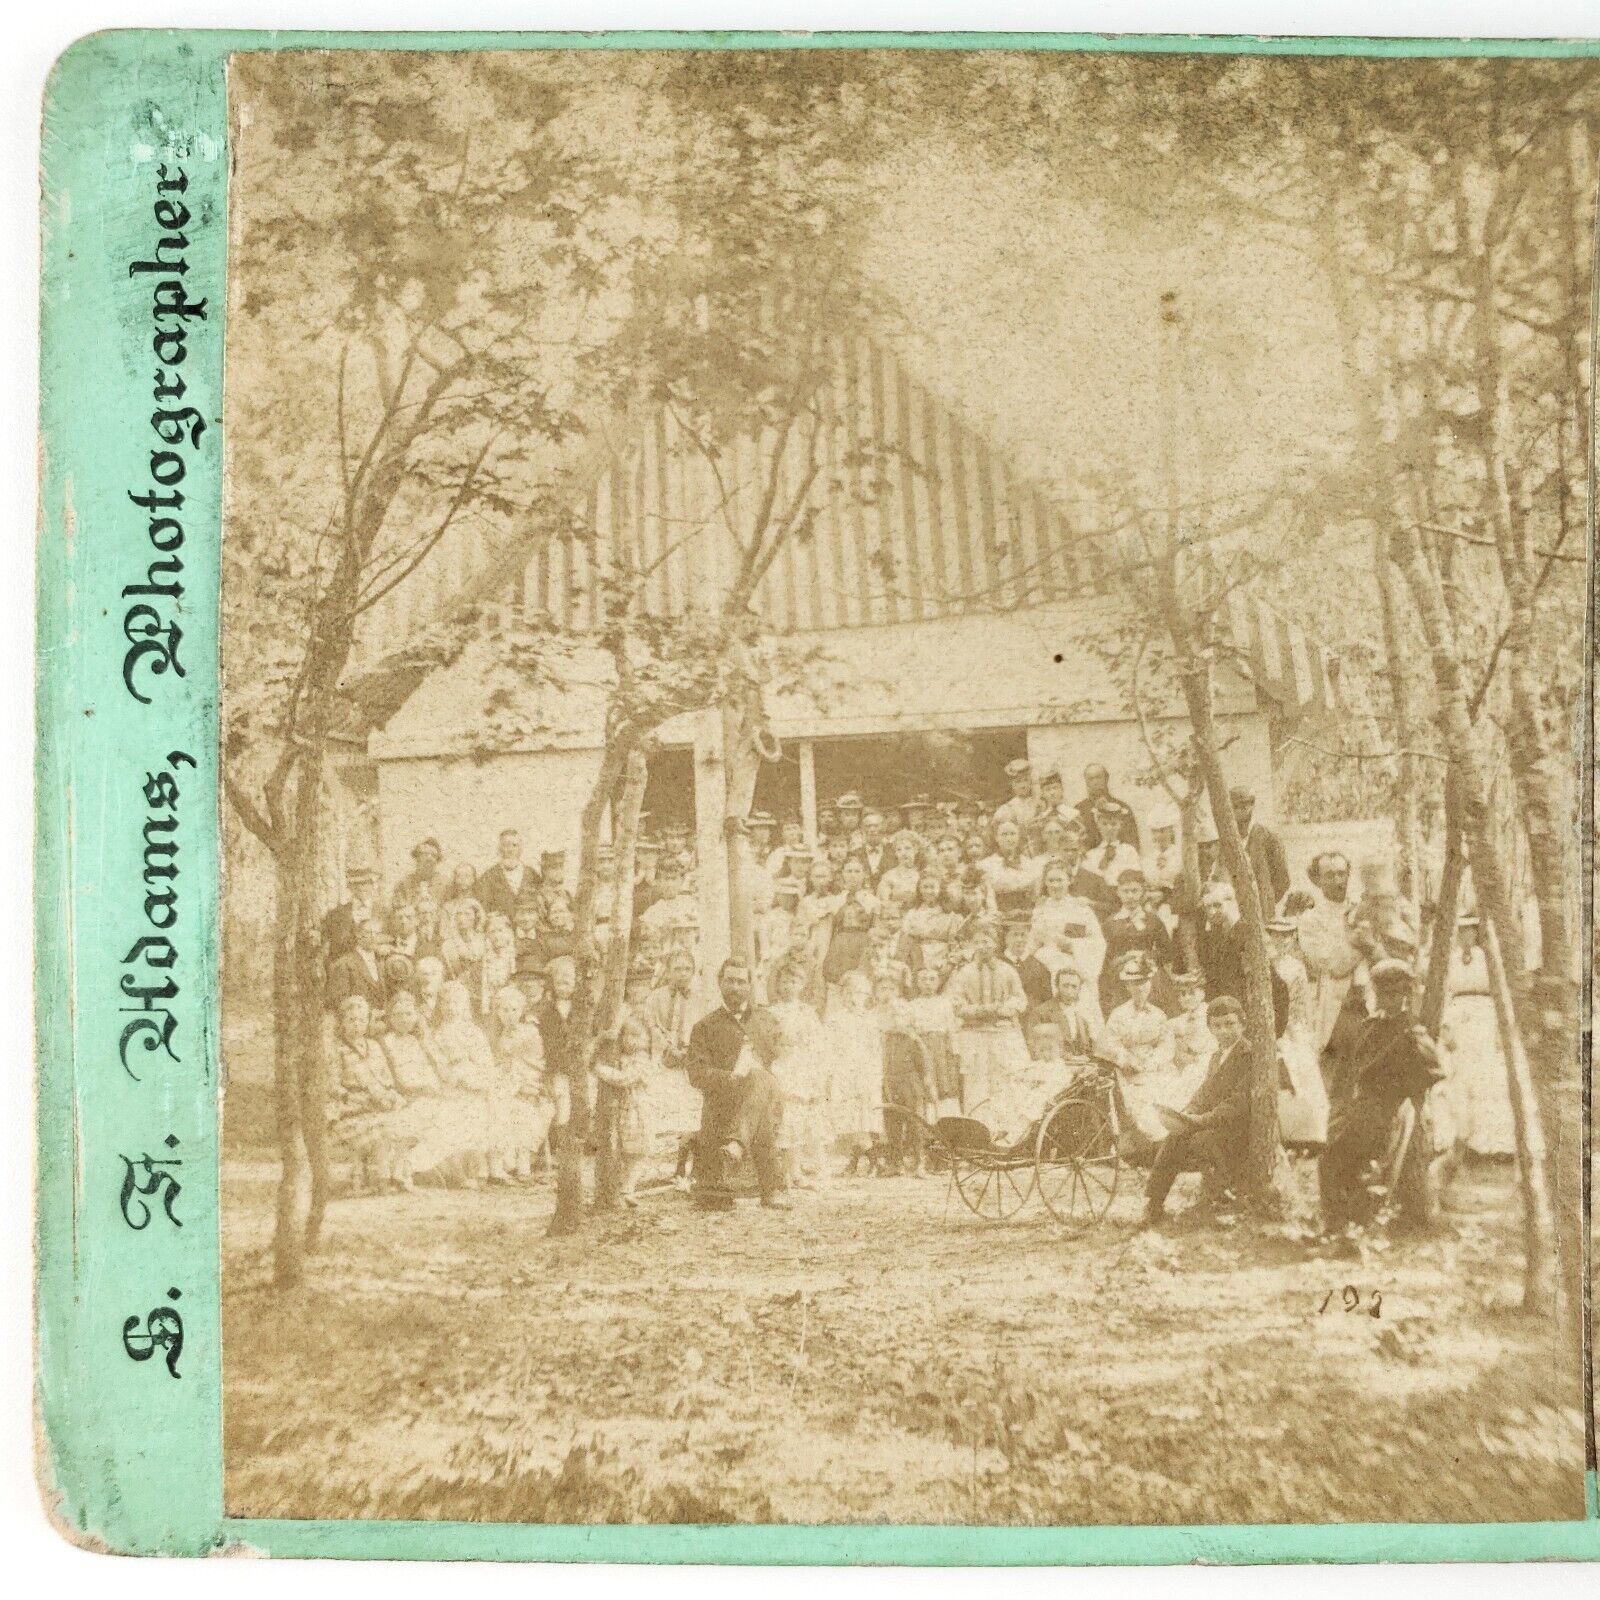 New Bedford Massachusetts Group Stereoview c1865 Civil War Era Barn Party A2583